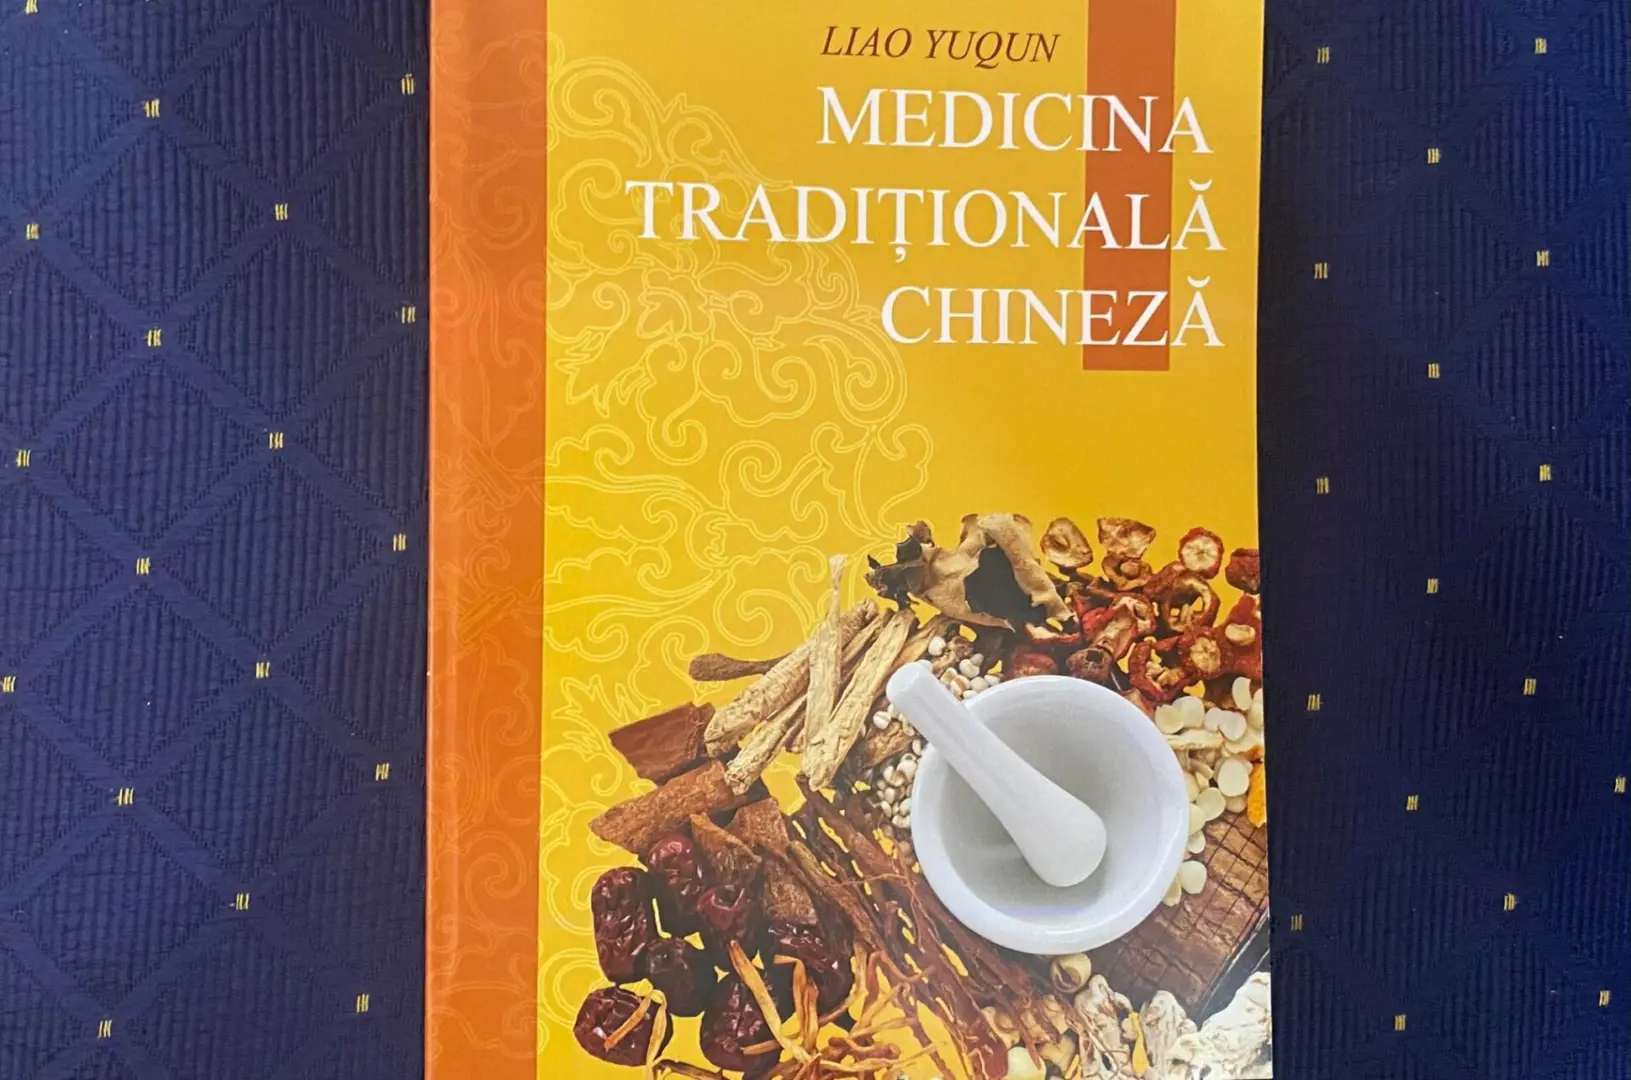 Medicina Traditionala Chineza 5 scaled